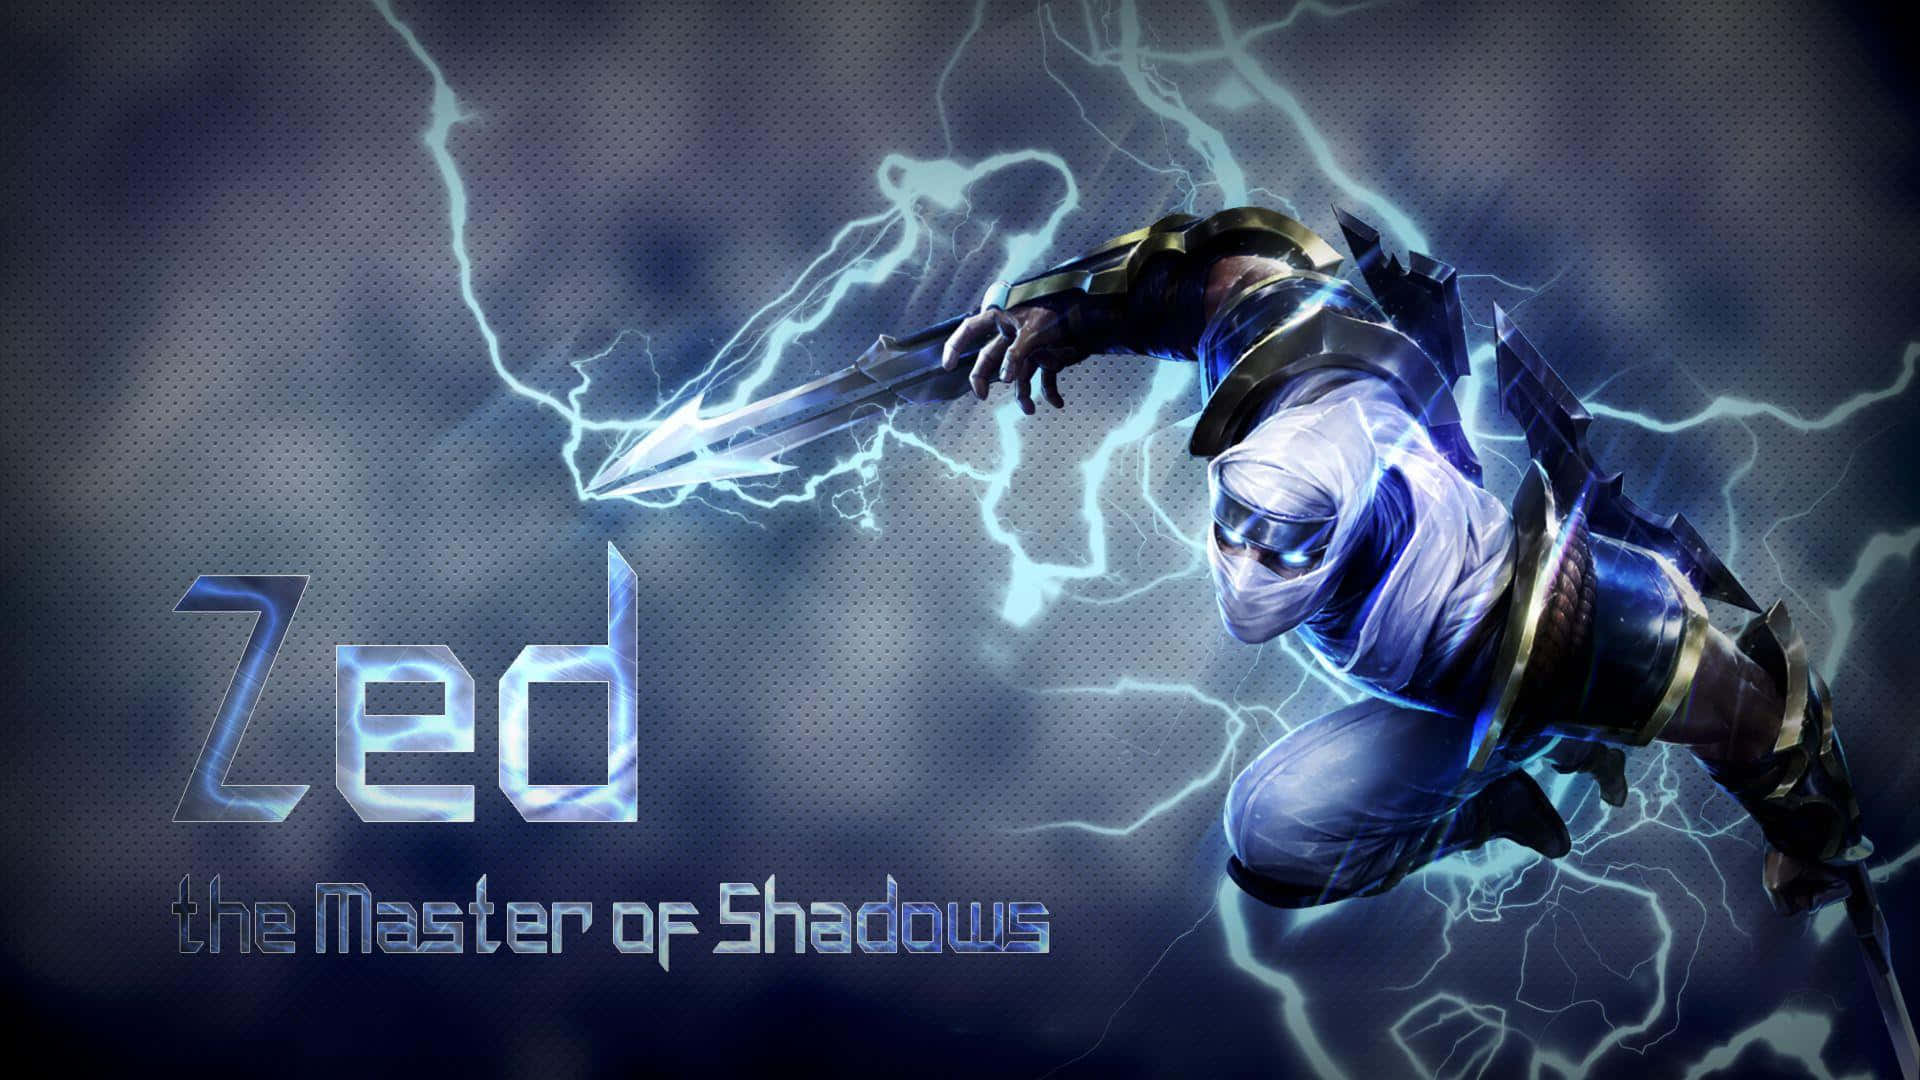 Zed Masterof Shadows Wallpaper